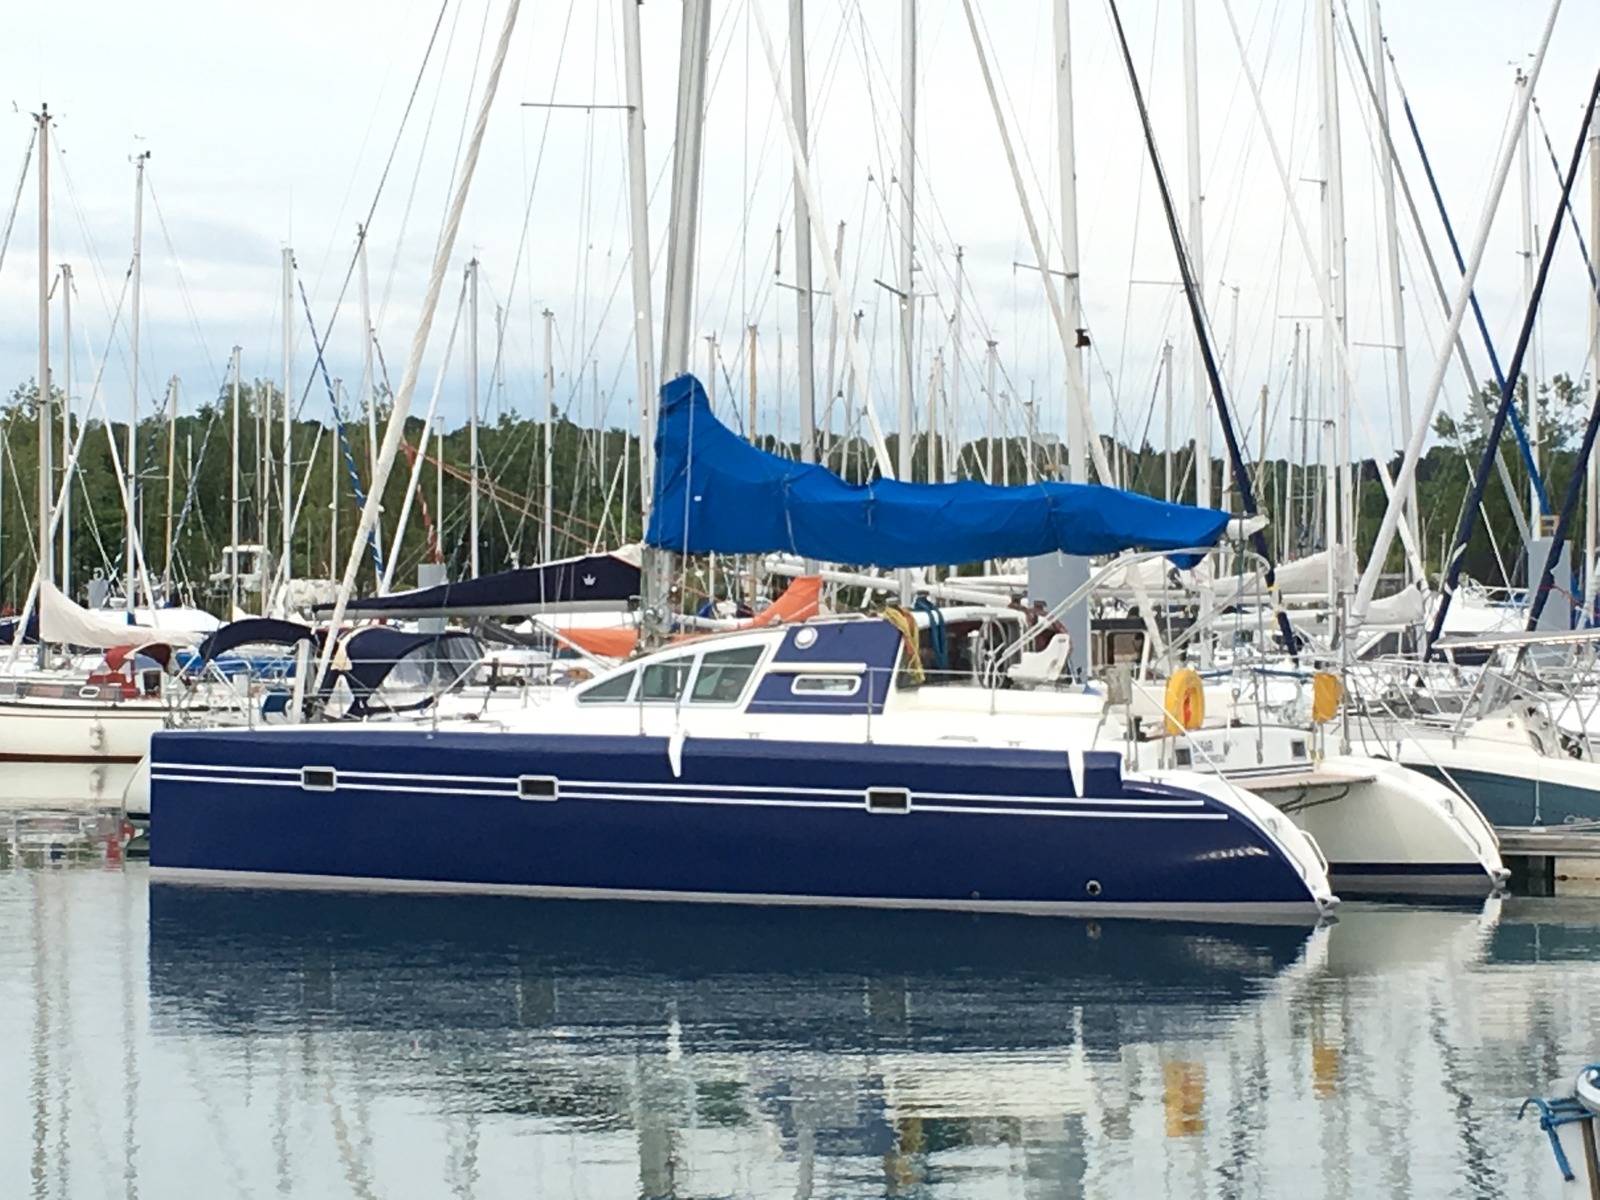 kennex catamaran for sale